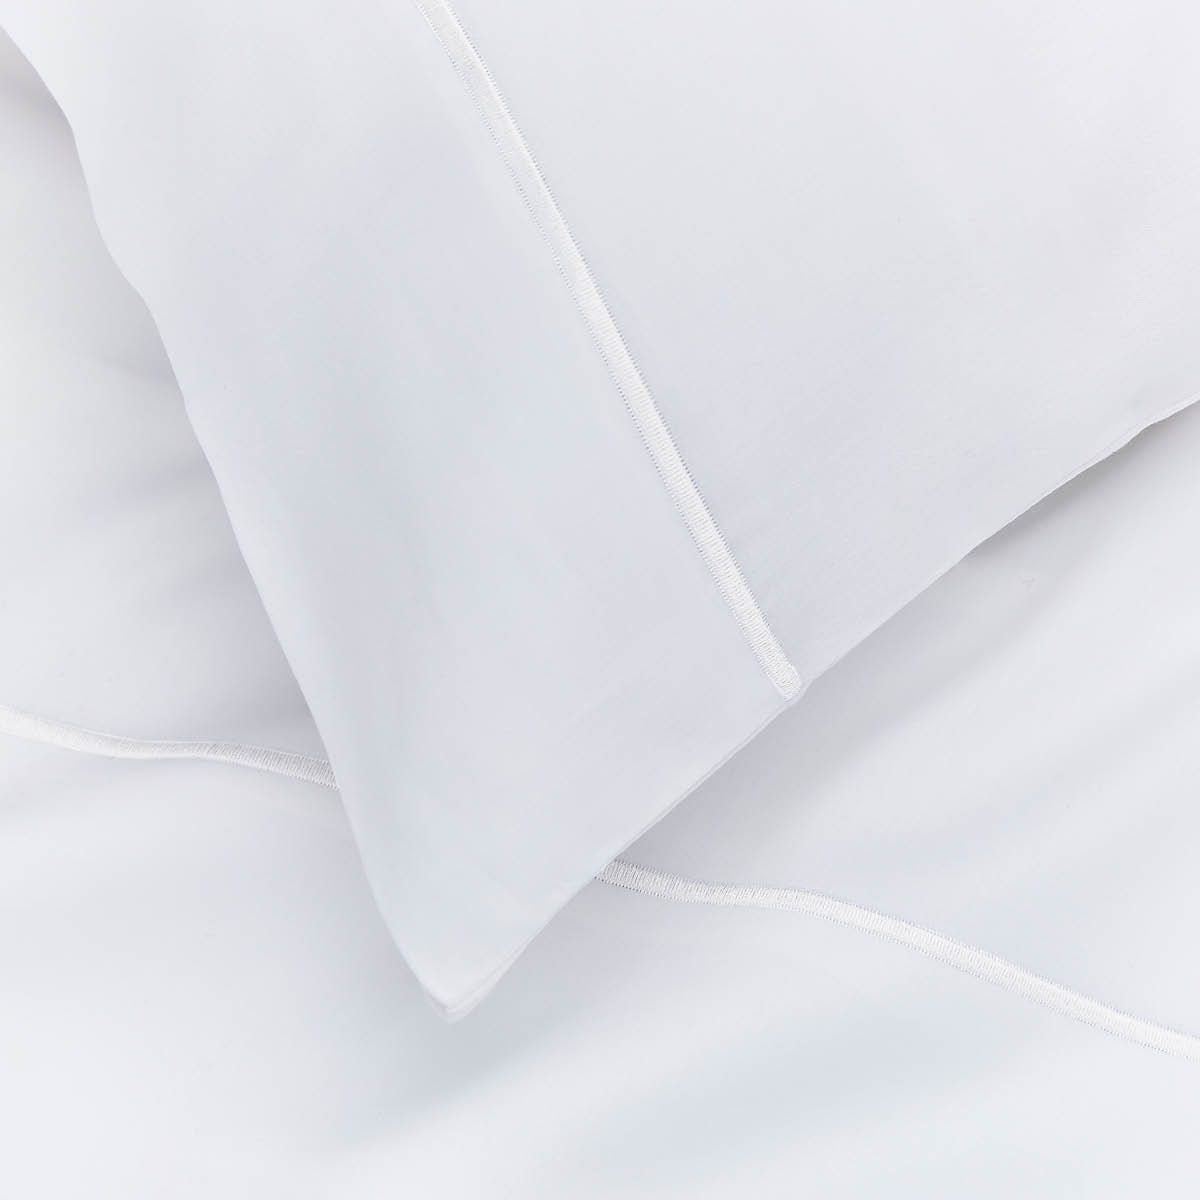 Pair of Mayfair Classic Pillowcases - 400 TC - Egyptian Cotton - White - DUSK